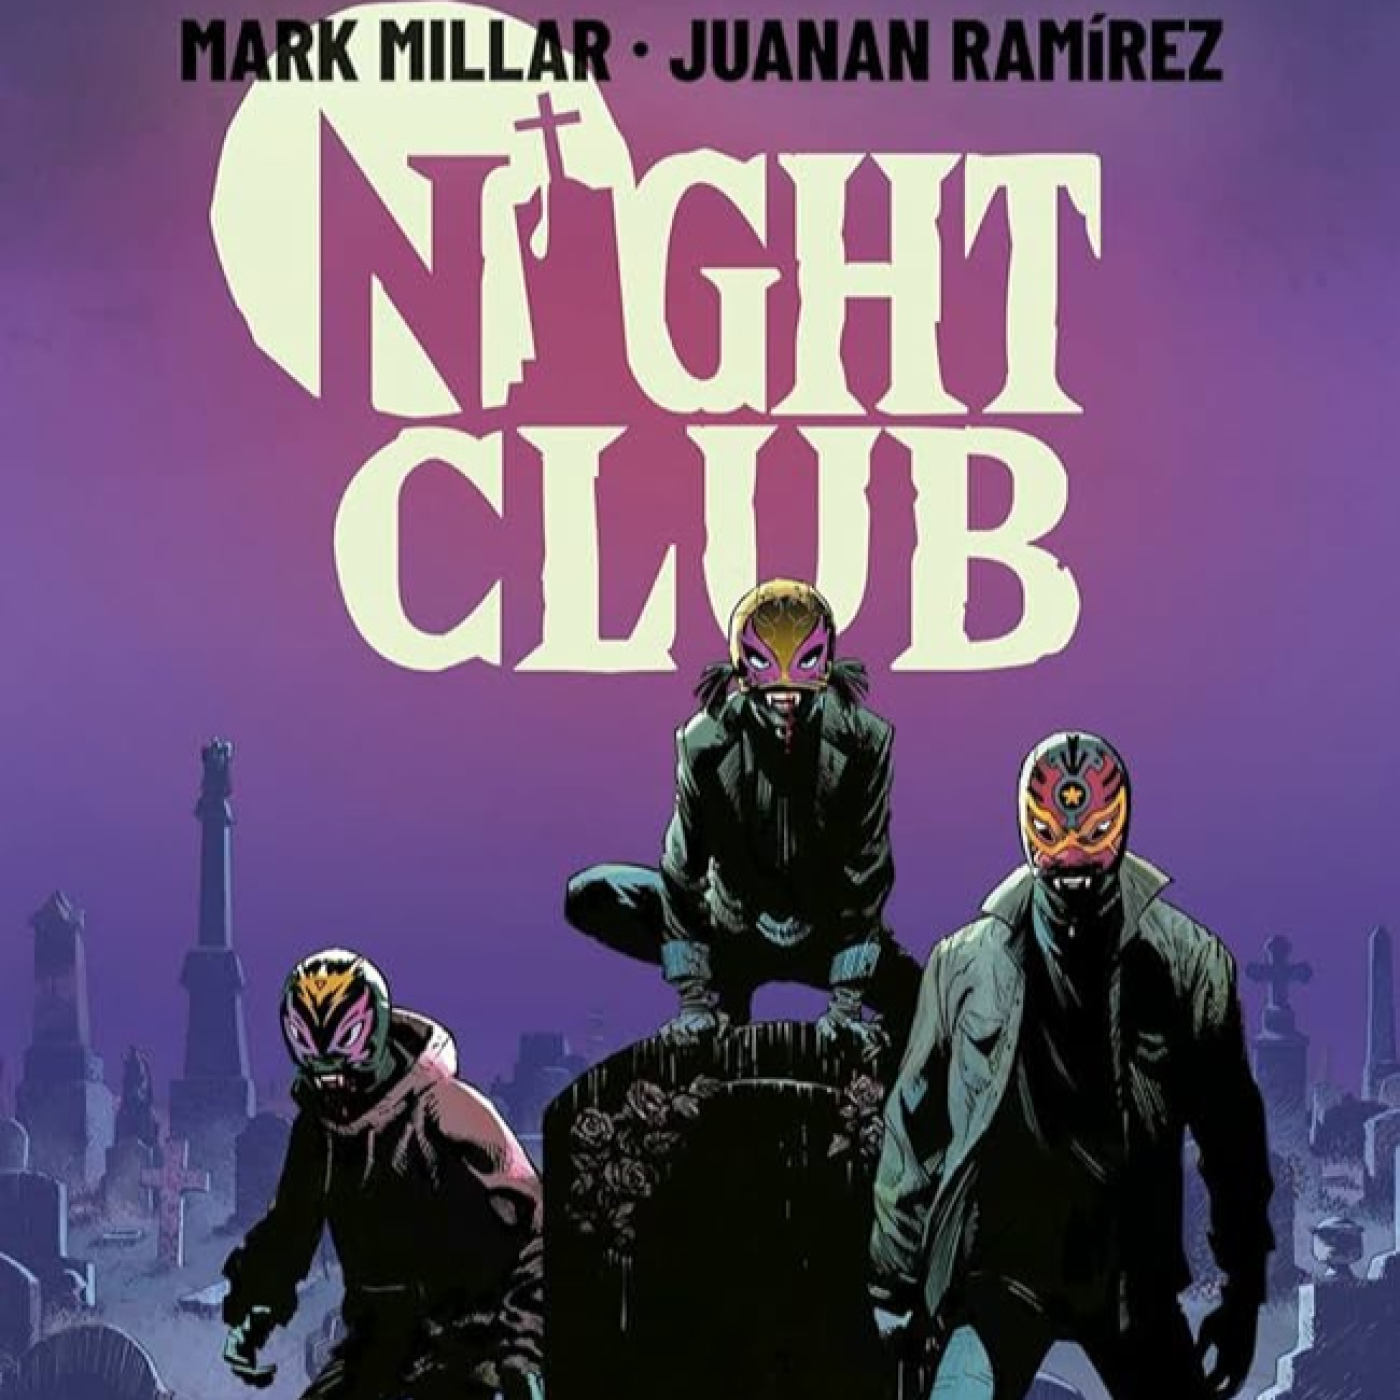 Lector misterio 51 Night club de Mark Millar